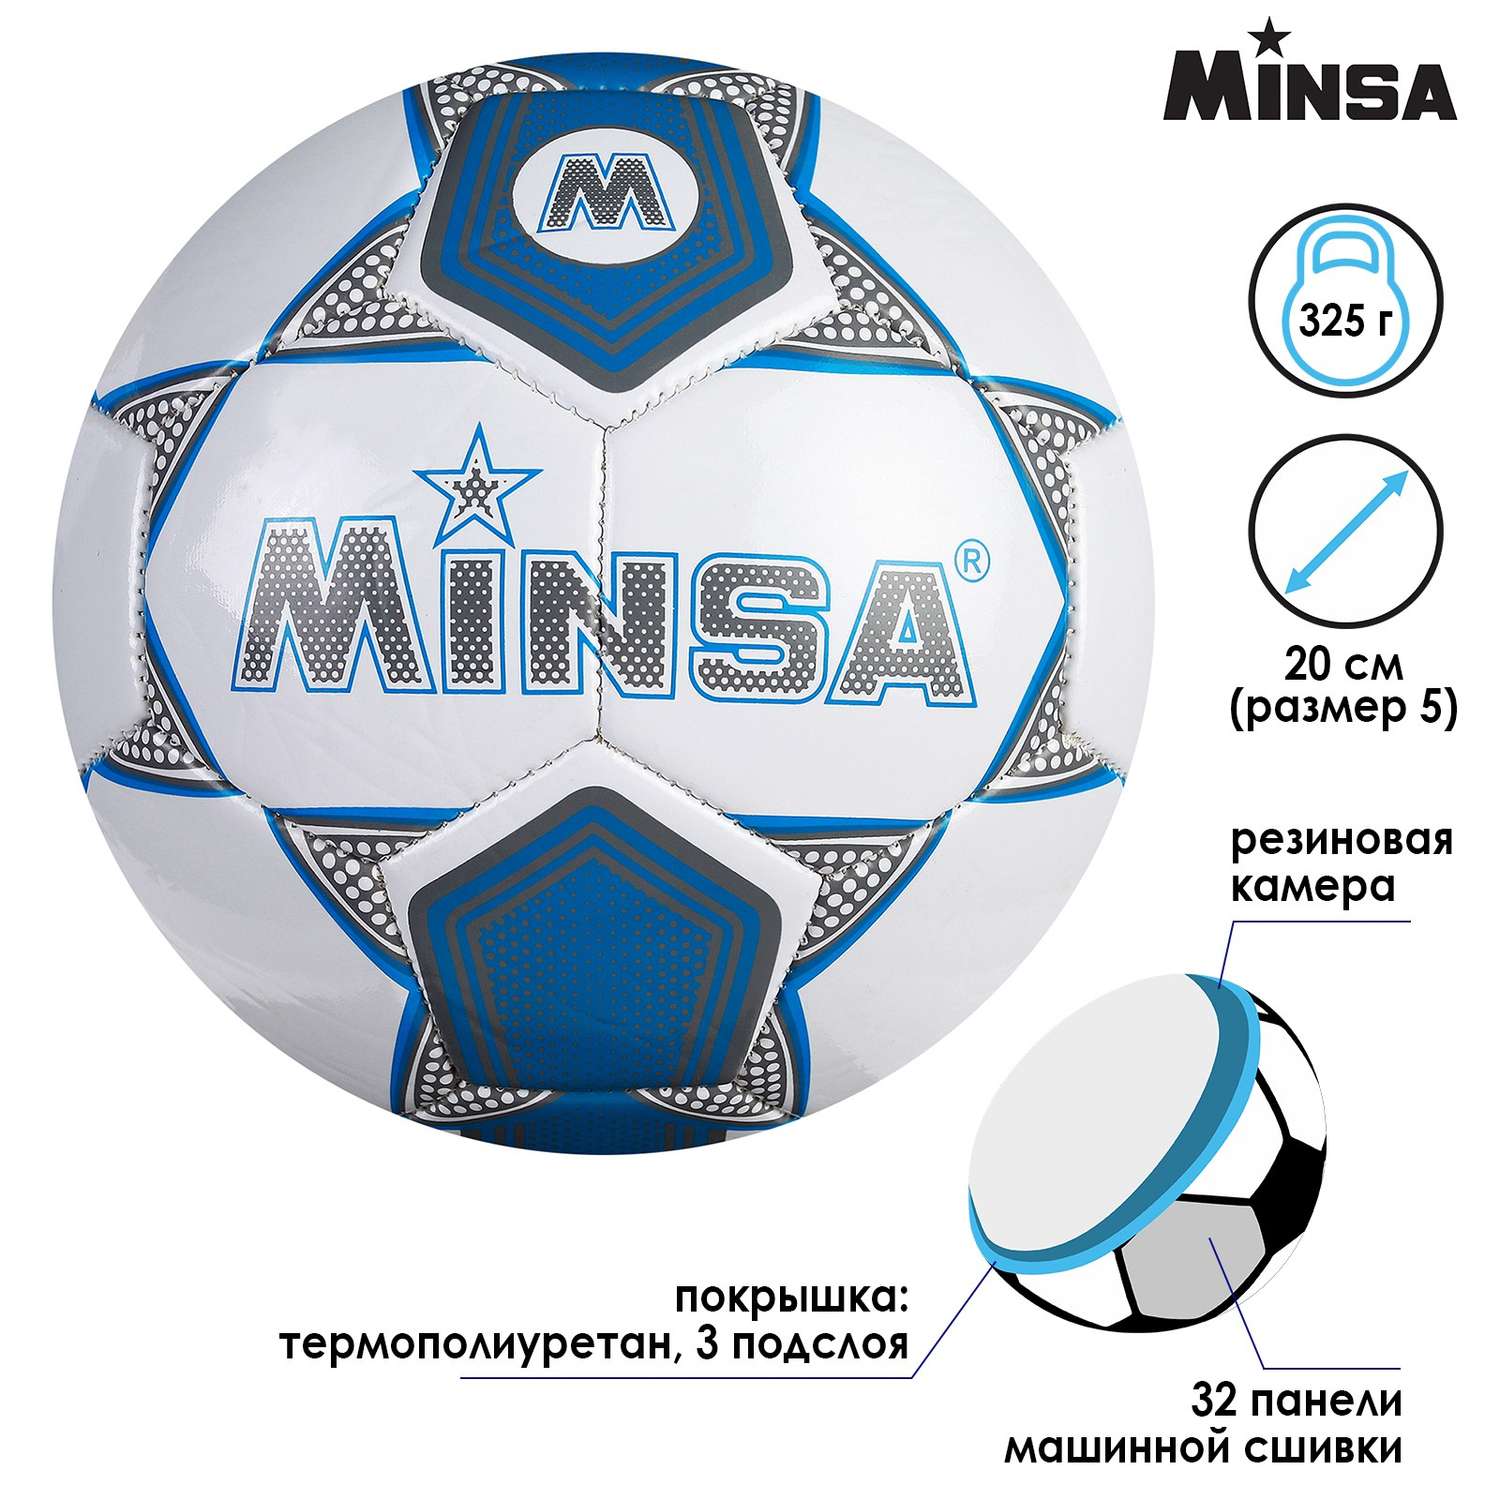 Мяч MINSA футбольный TPU. машинная сшивка. 32 панели. размер 5. 325 г - фото 2